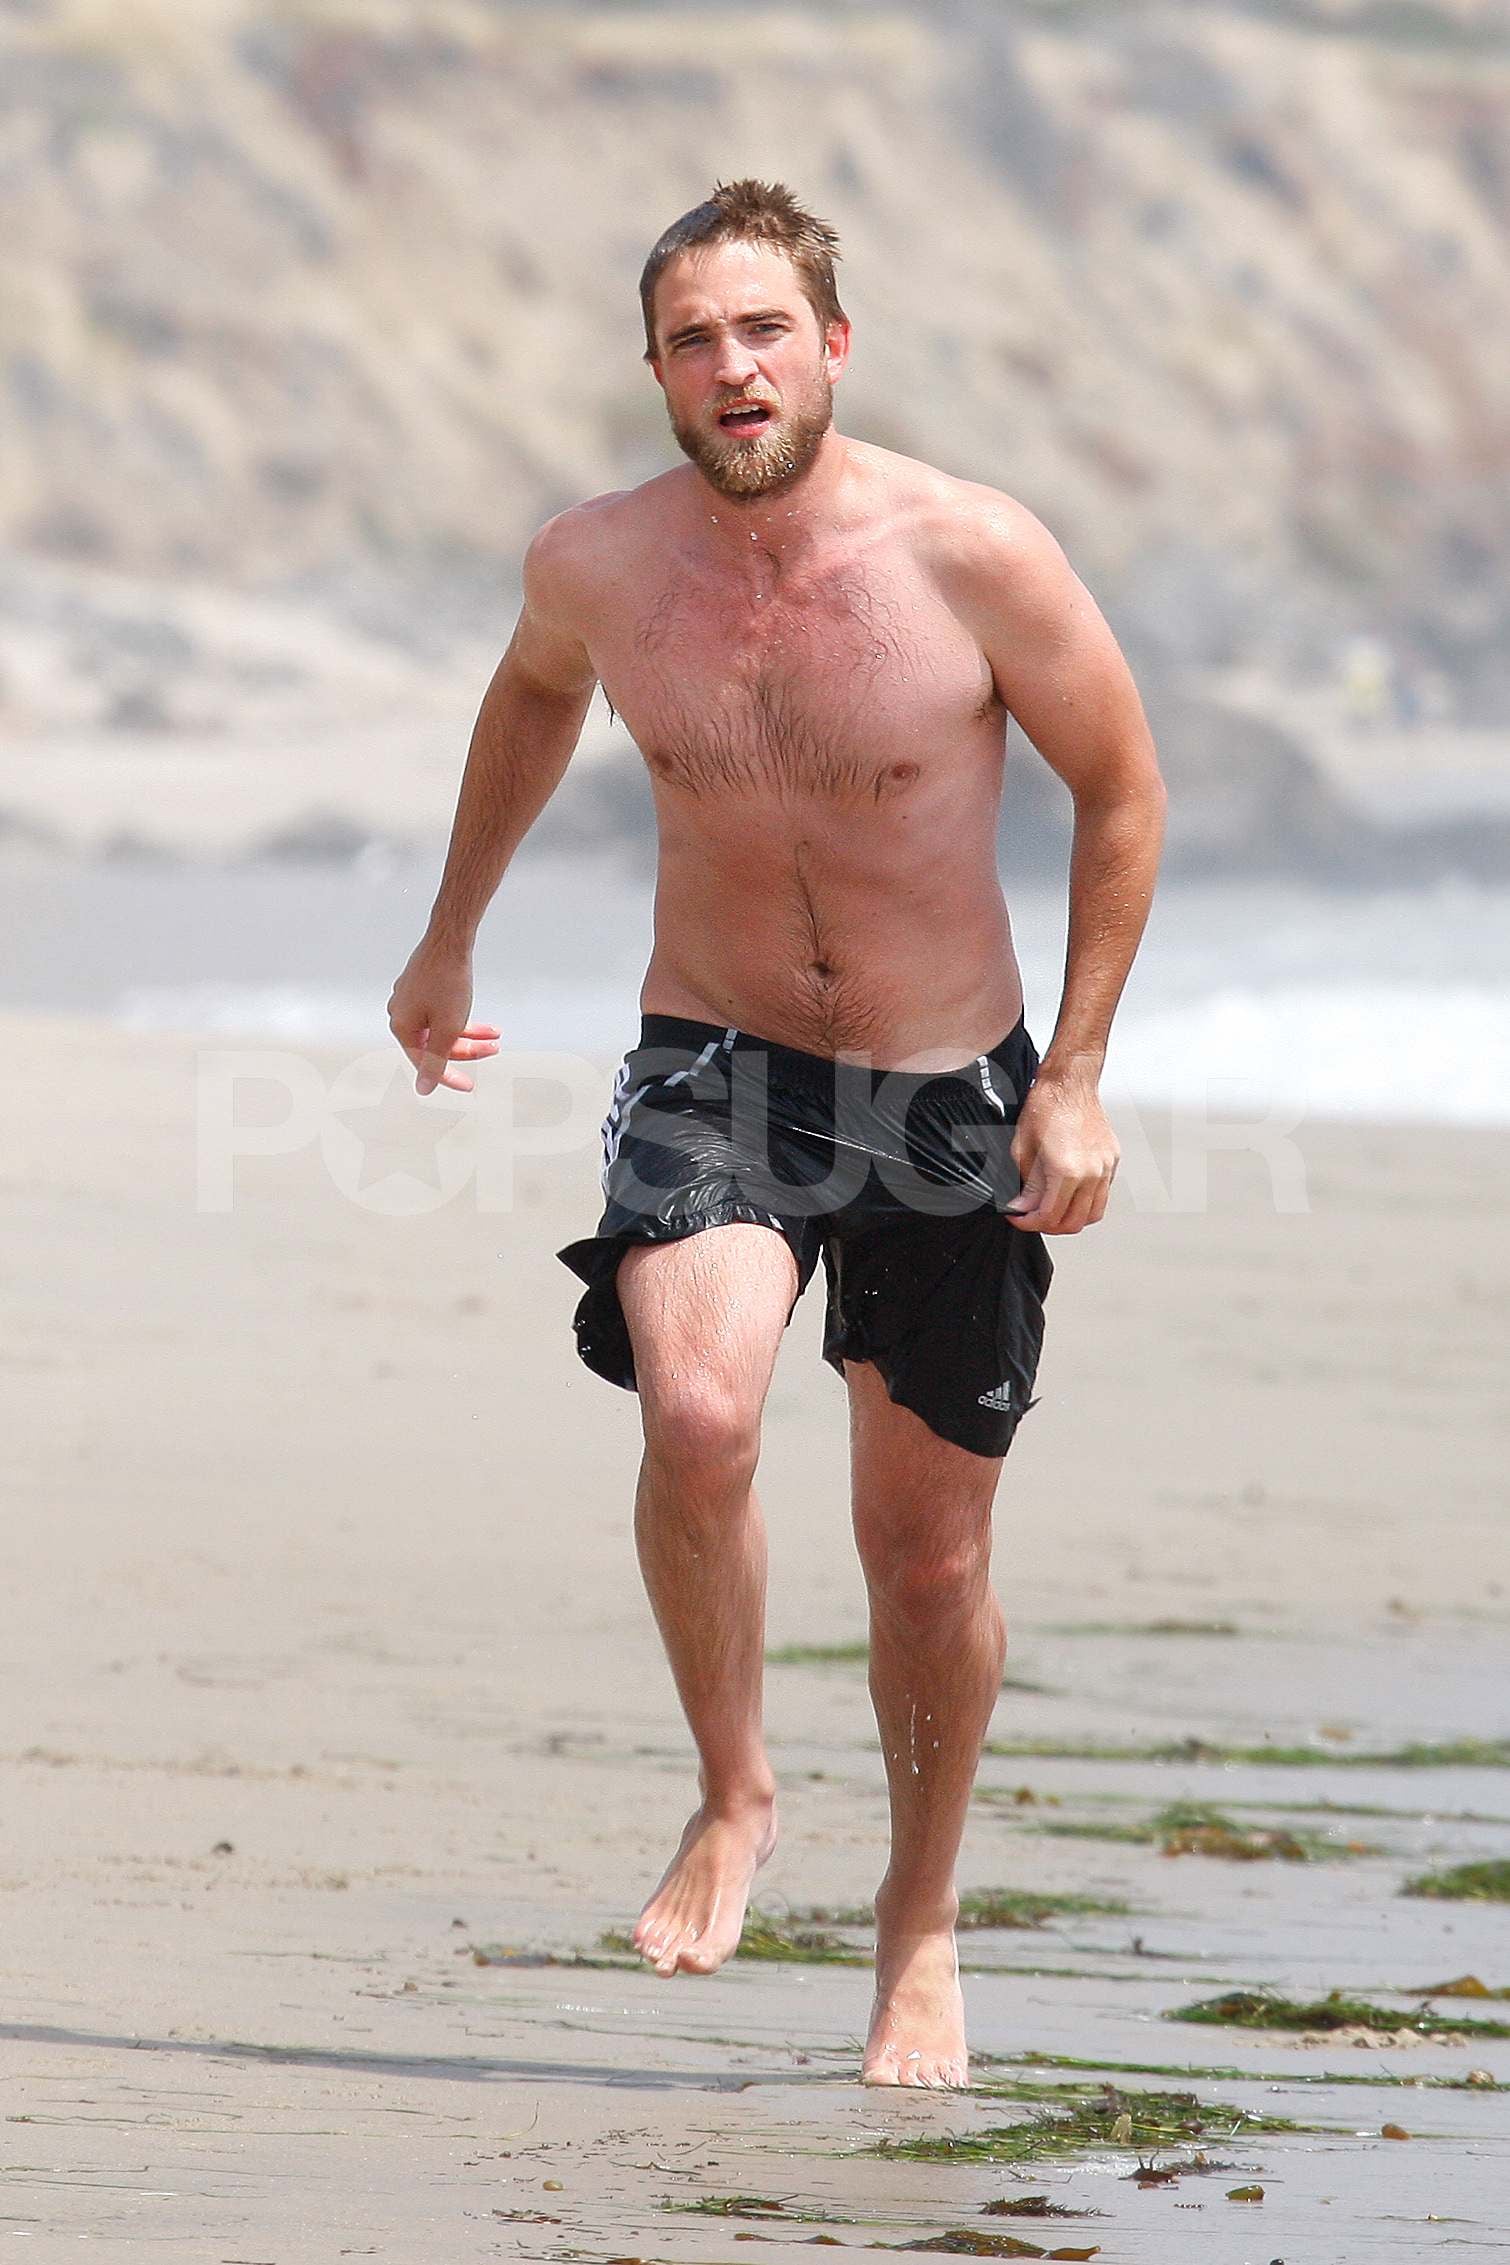 Robert Pattinson Went Running Shirtless On The Beach Shirtless